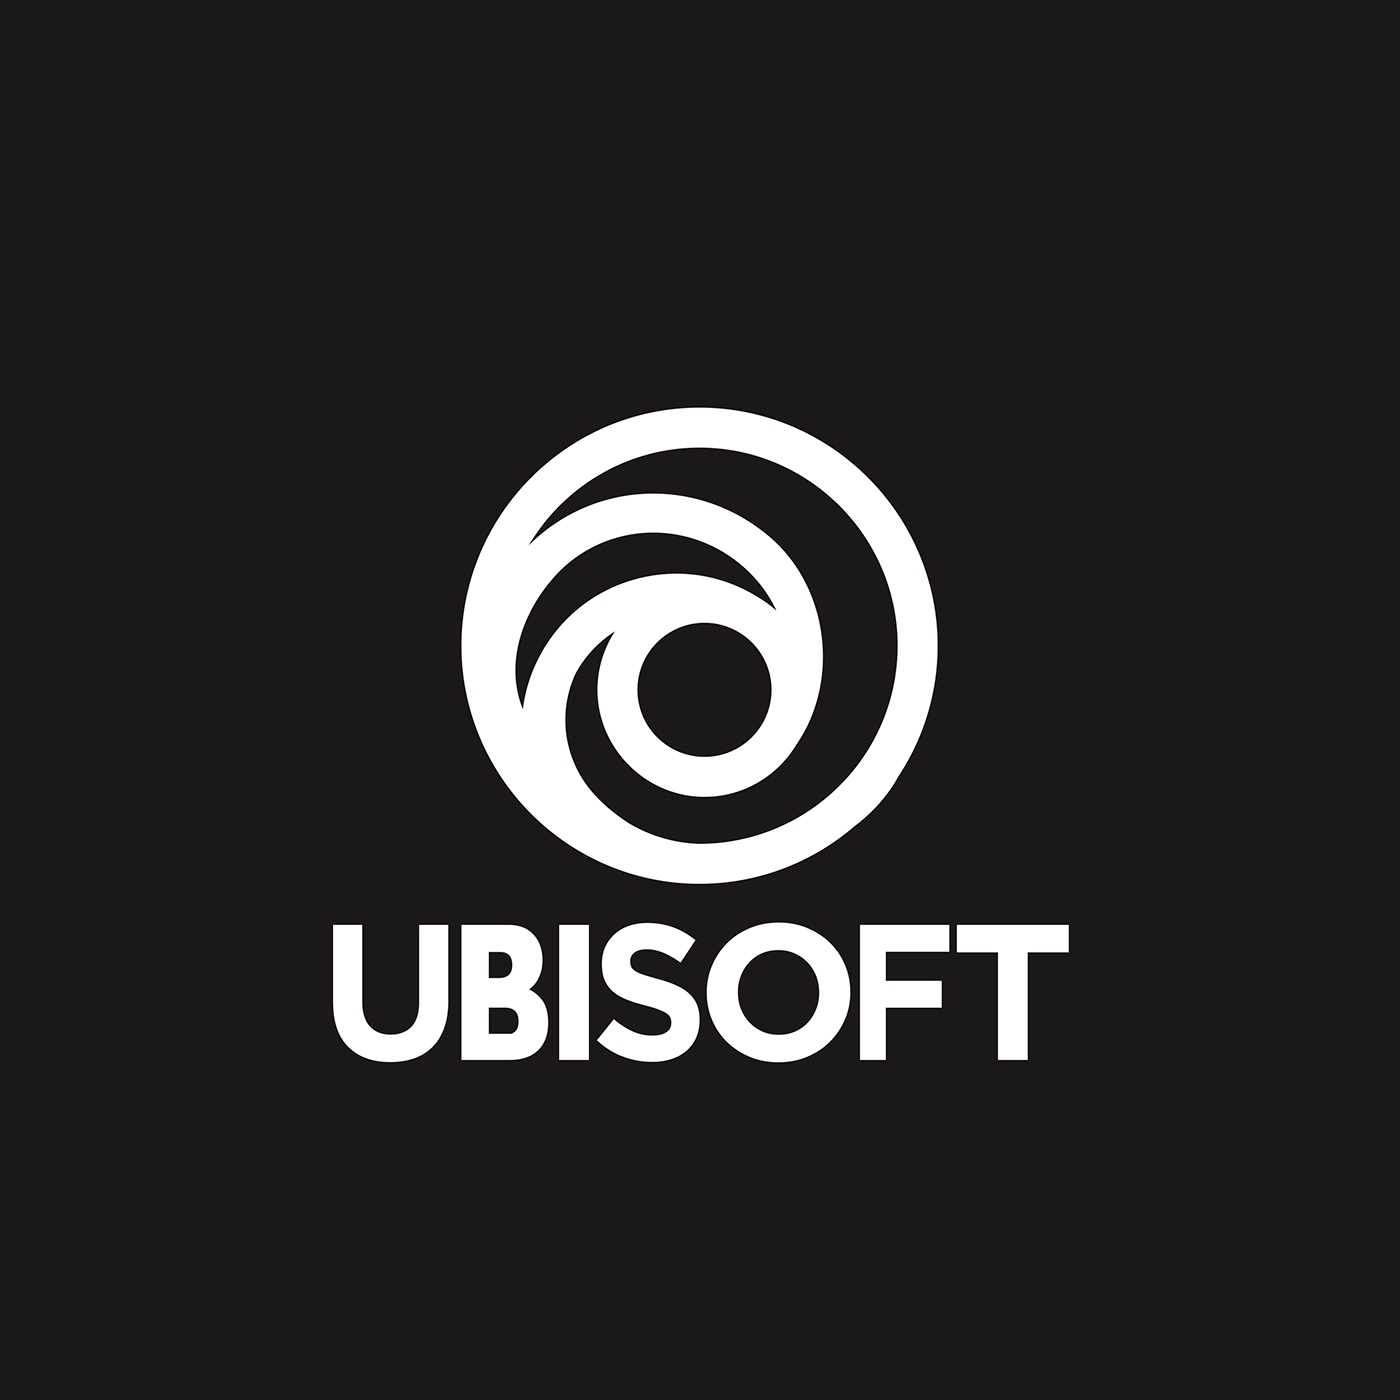 Ubisoft uplay. Юбисофт. Q,BCJAN. Юбисофт лого. Юплей.